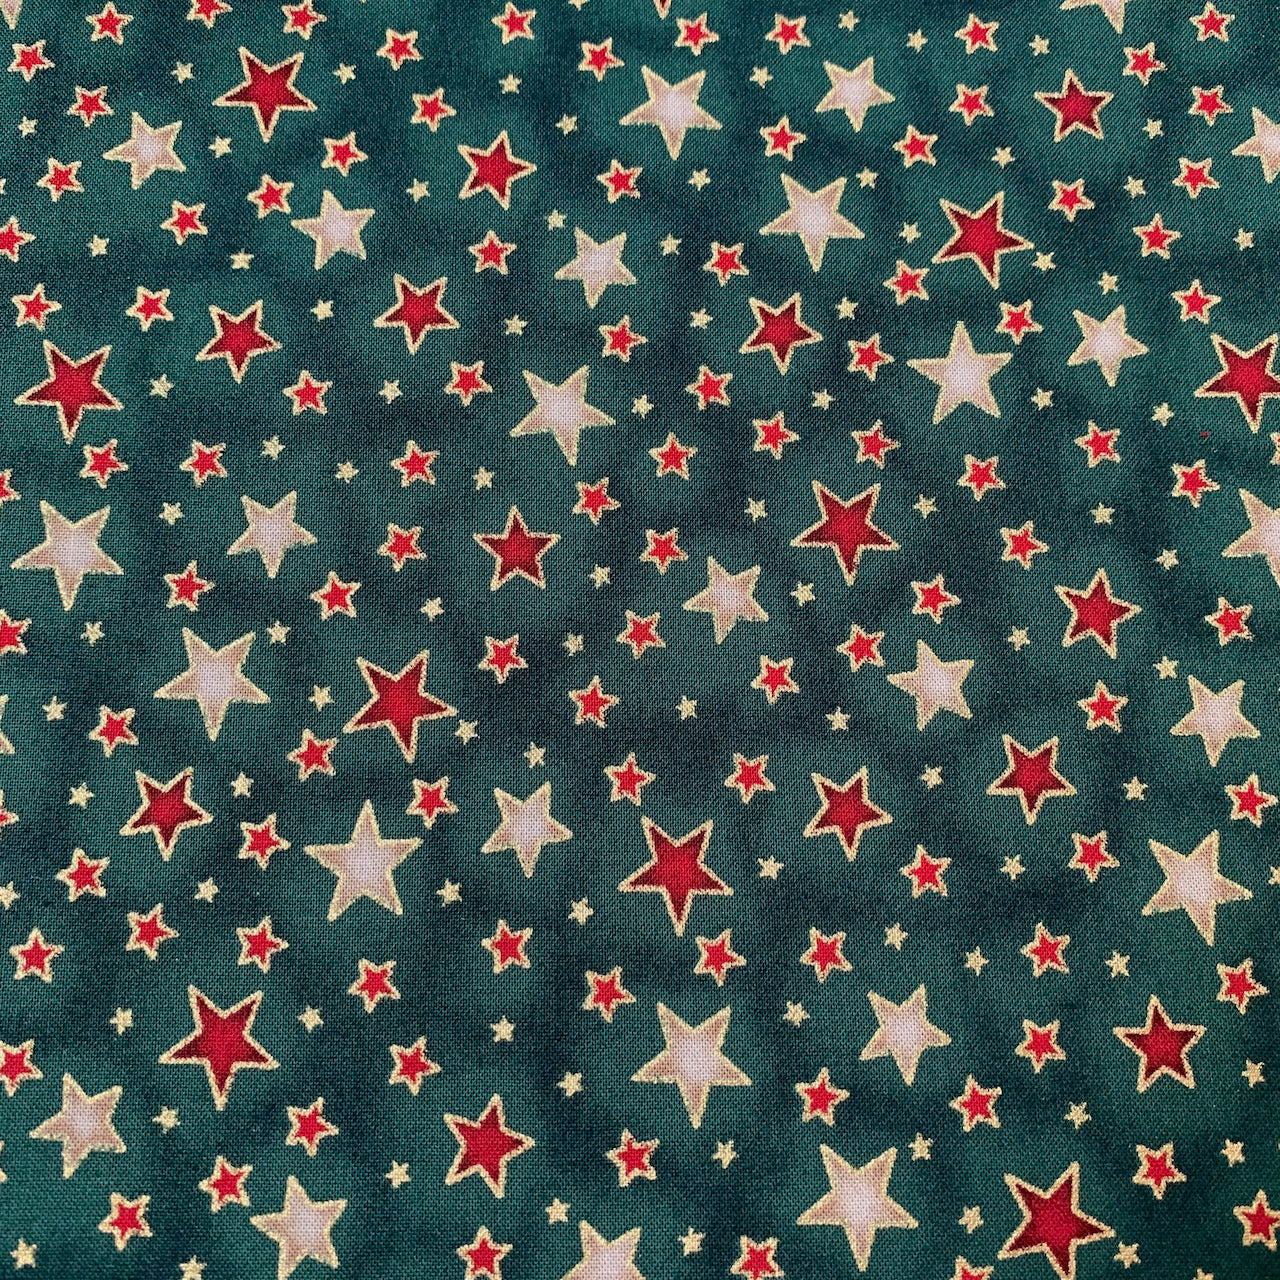 Fabric Felt - Christmas Stars on Green